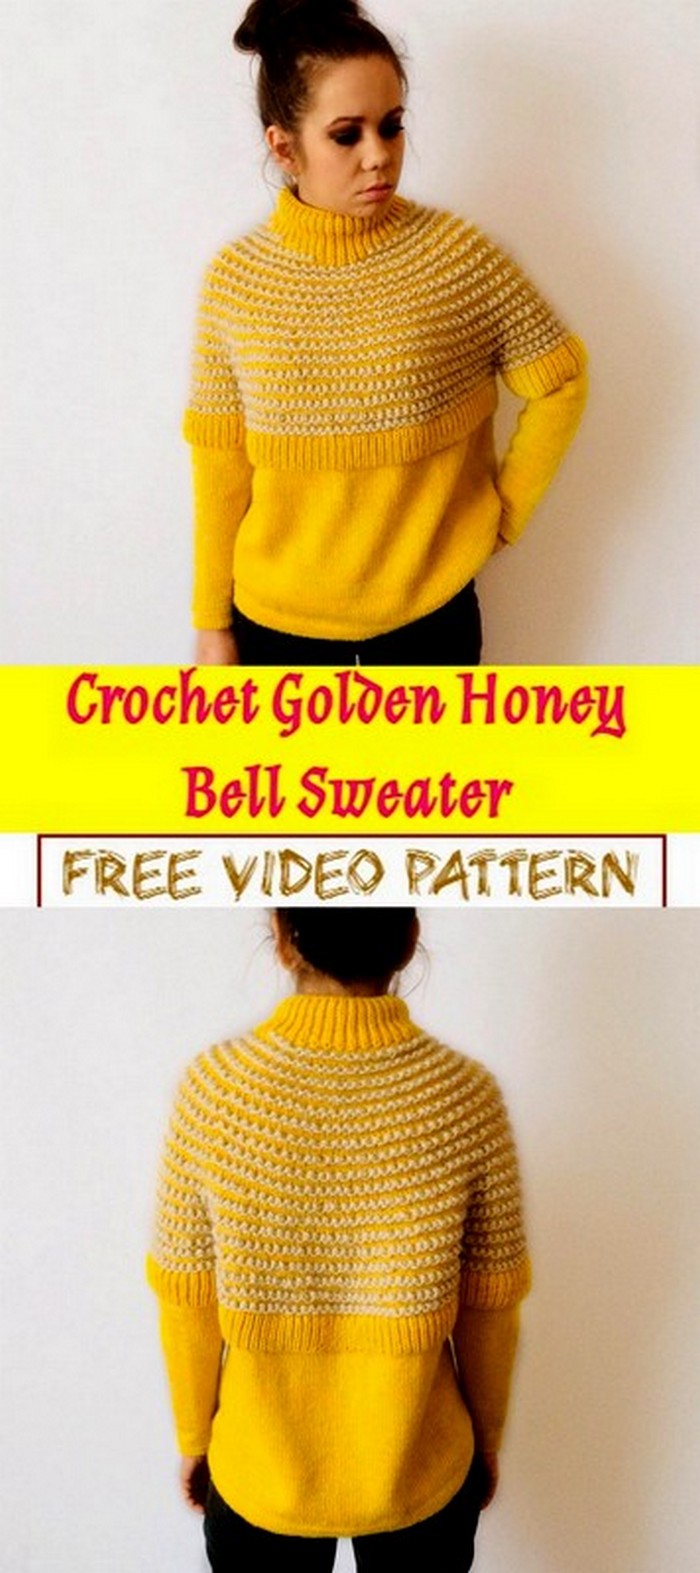 Crochet Golden Honey Bell Sweater